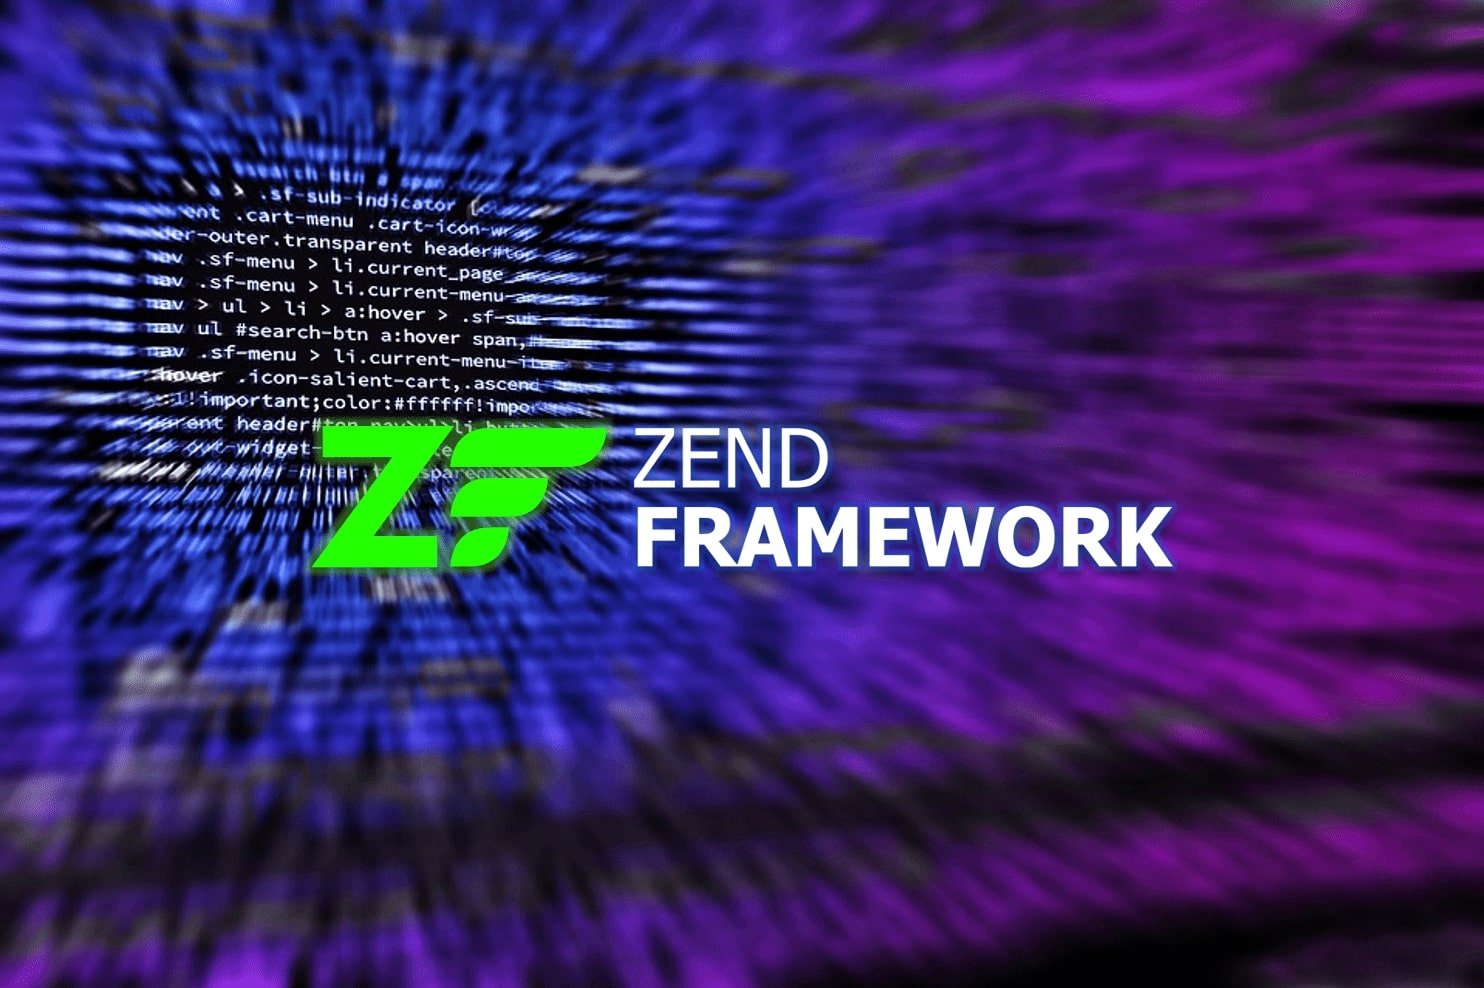 zend-framework-remote-code-execution-vulnerability-revealed